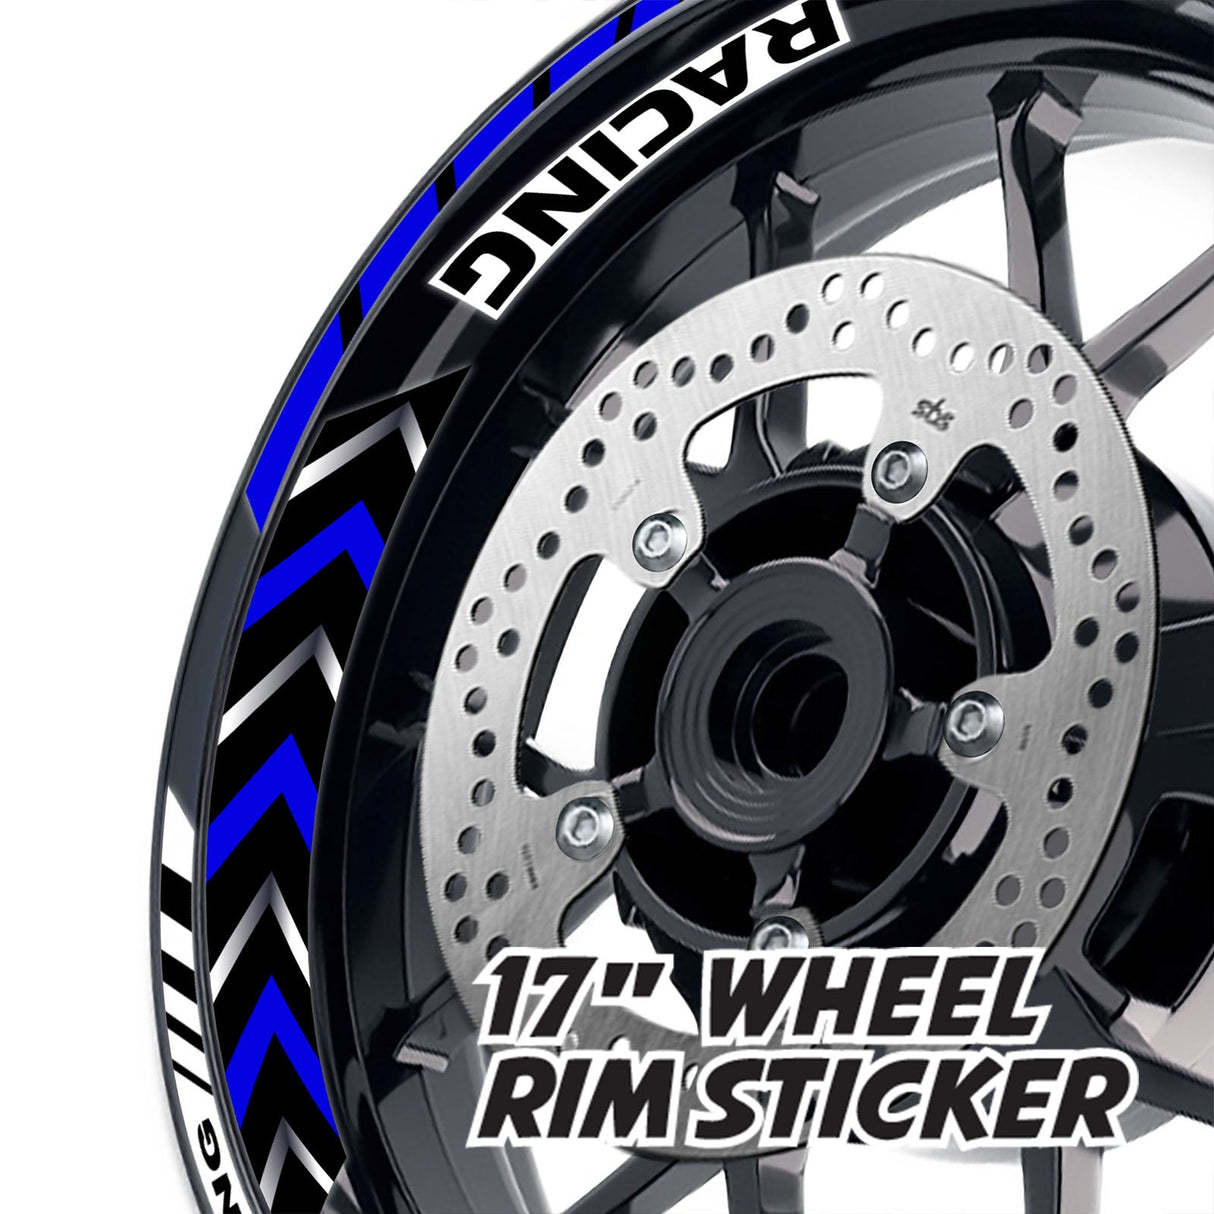 StickerBao Blue 17 inch GP11 Platinum Inner Edge Rim Sticker Universal Motorcycle Rim Wheel Decal Racing For Honda